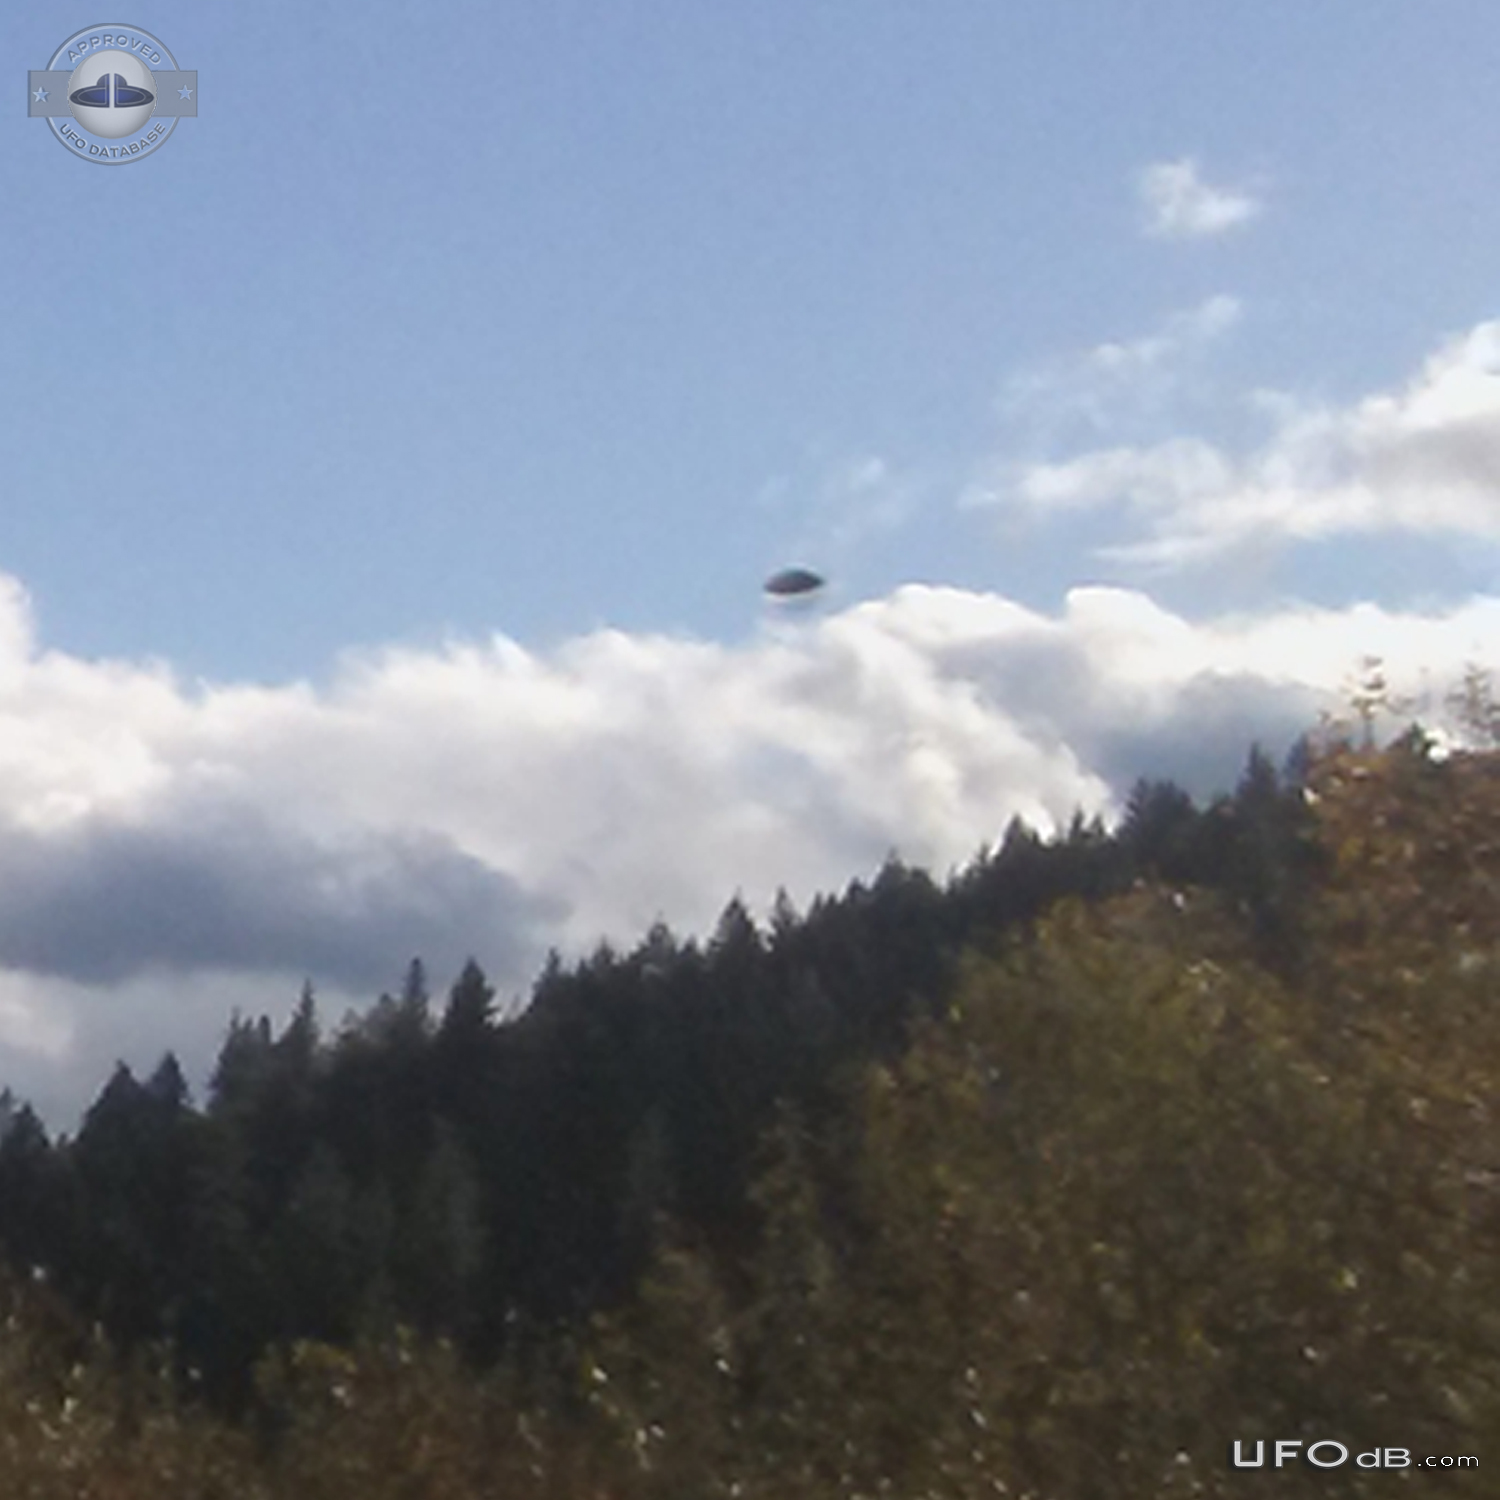 Photos near Grants Pass captured UFO on film - Merlin Oregon USA 2016 UFO Picture #807-4